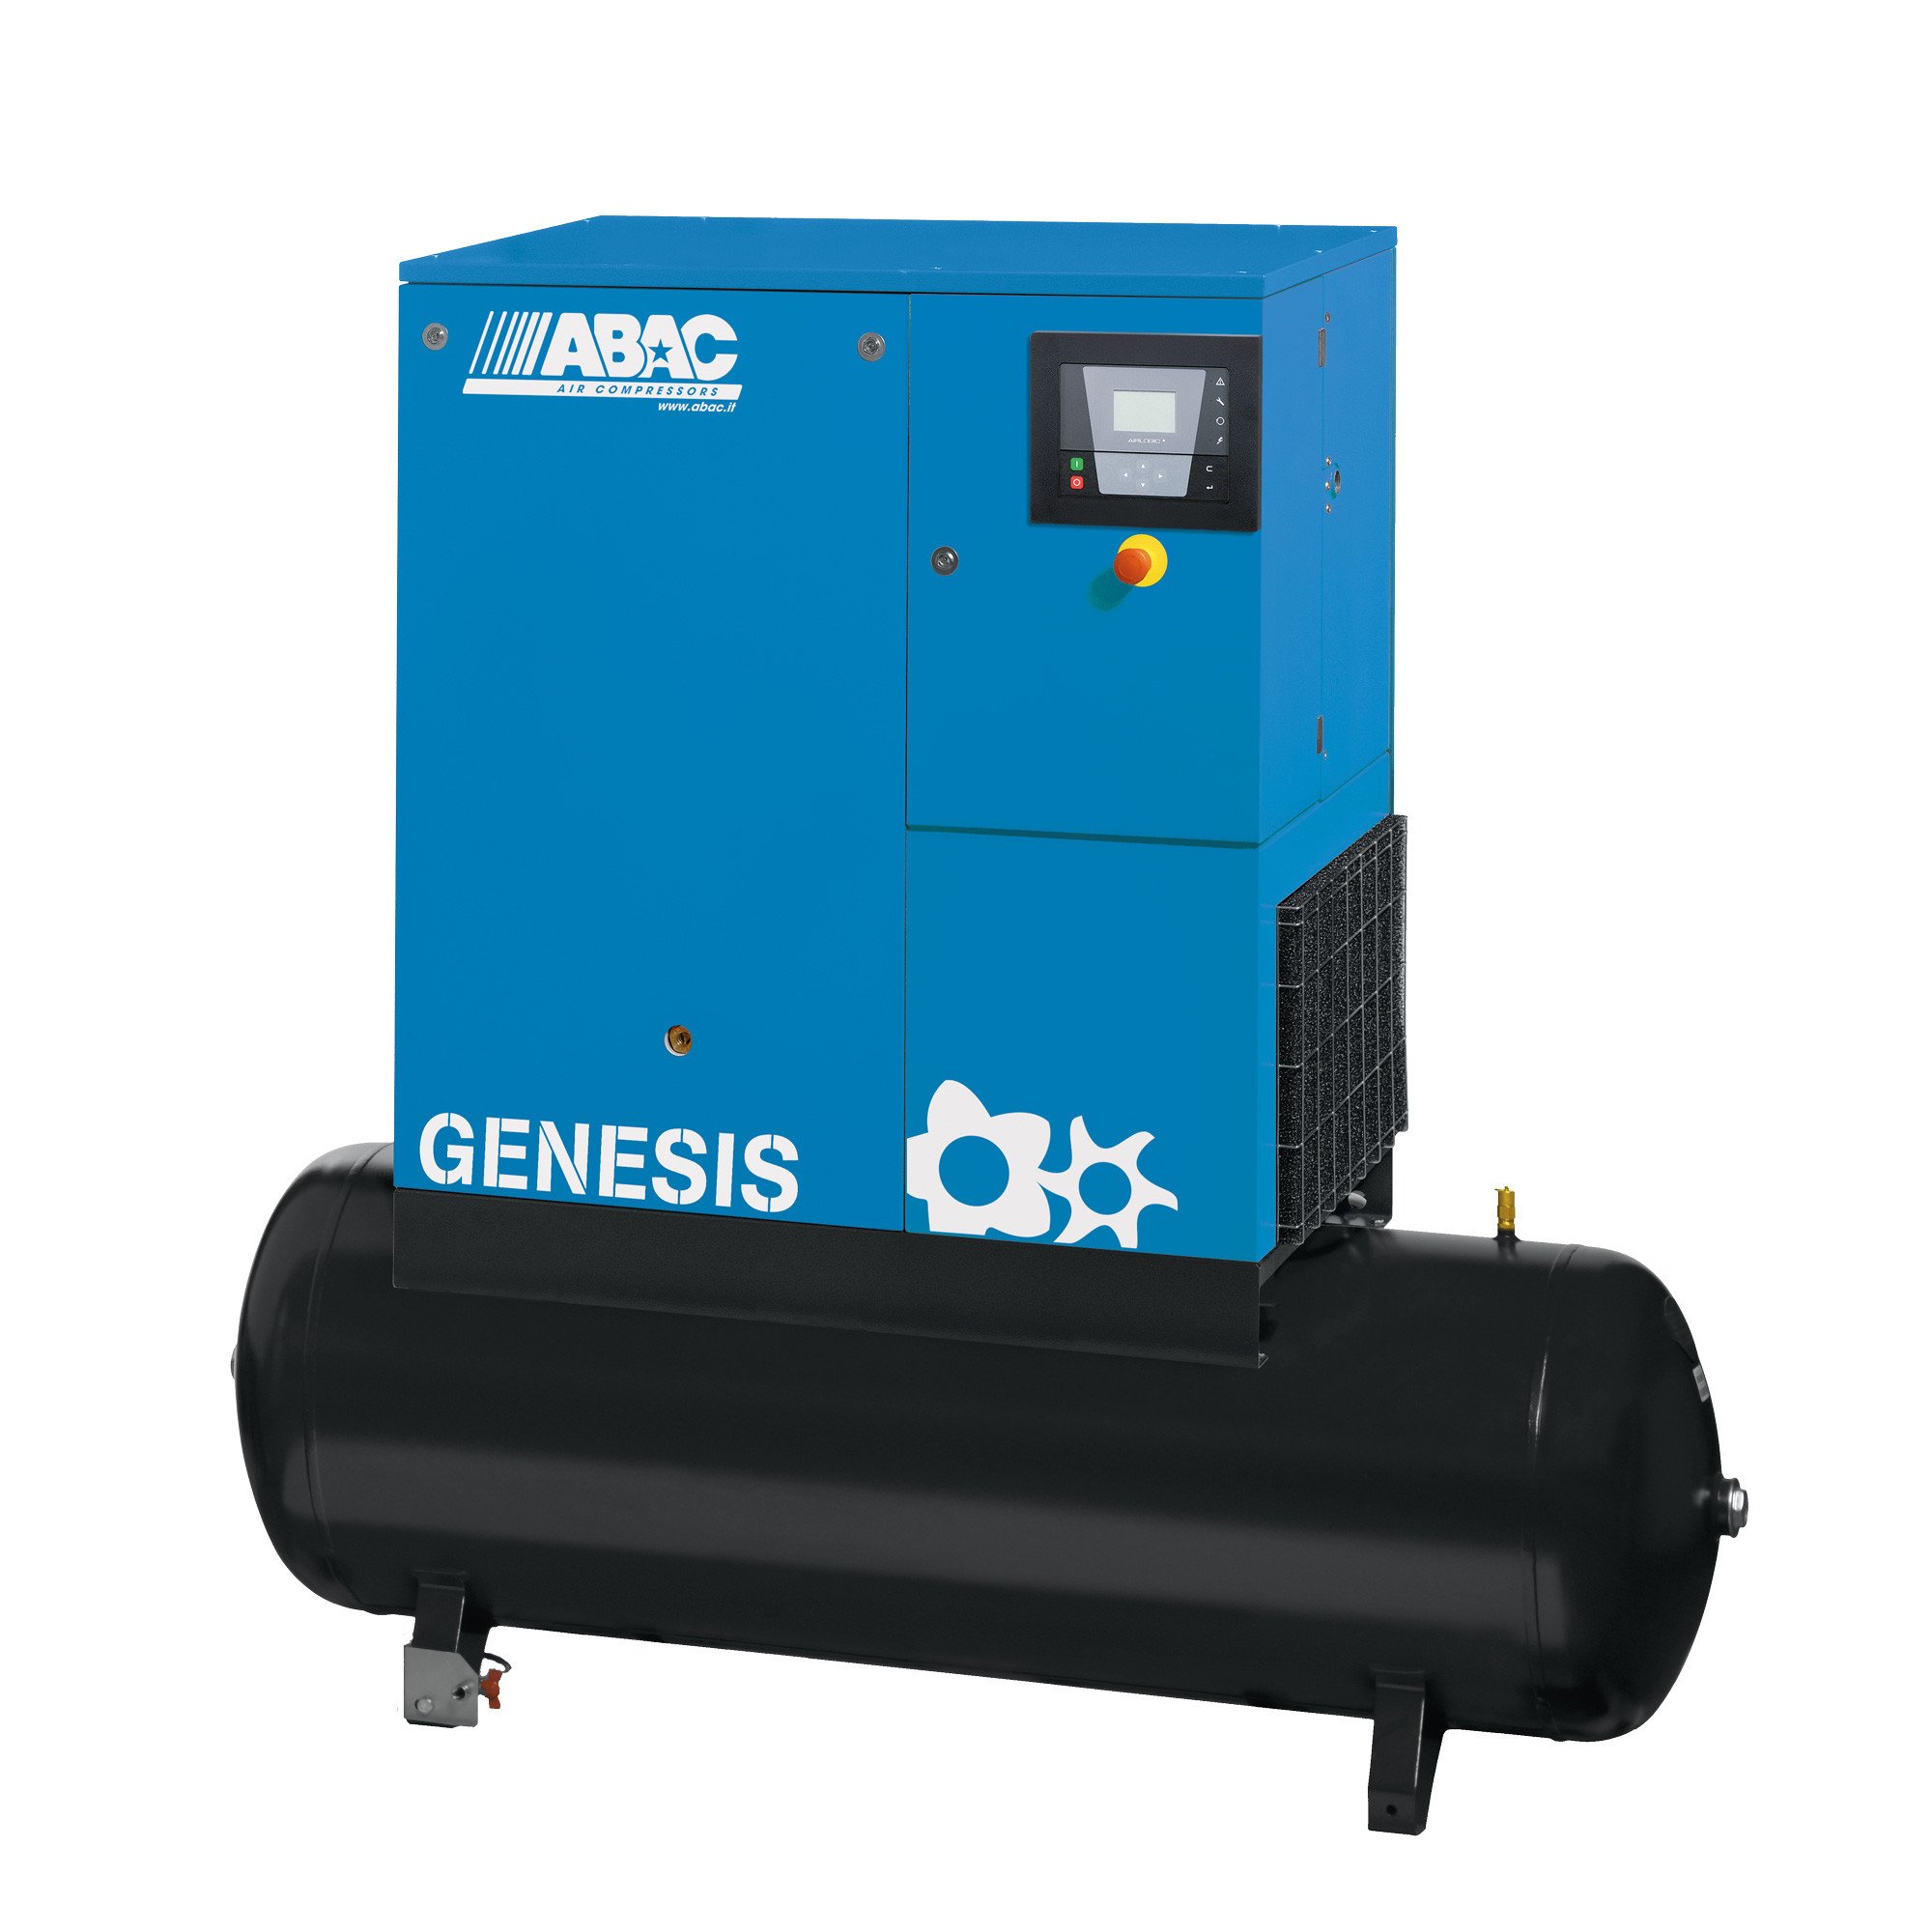 ABAC Genesis 500L, 52.7 CFM, 11千瓦固定转速螺杆空压机